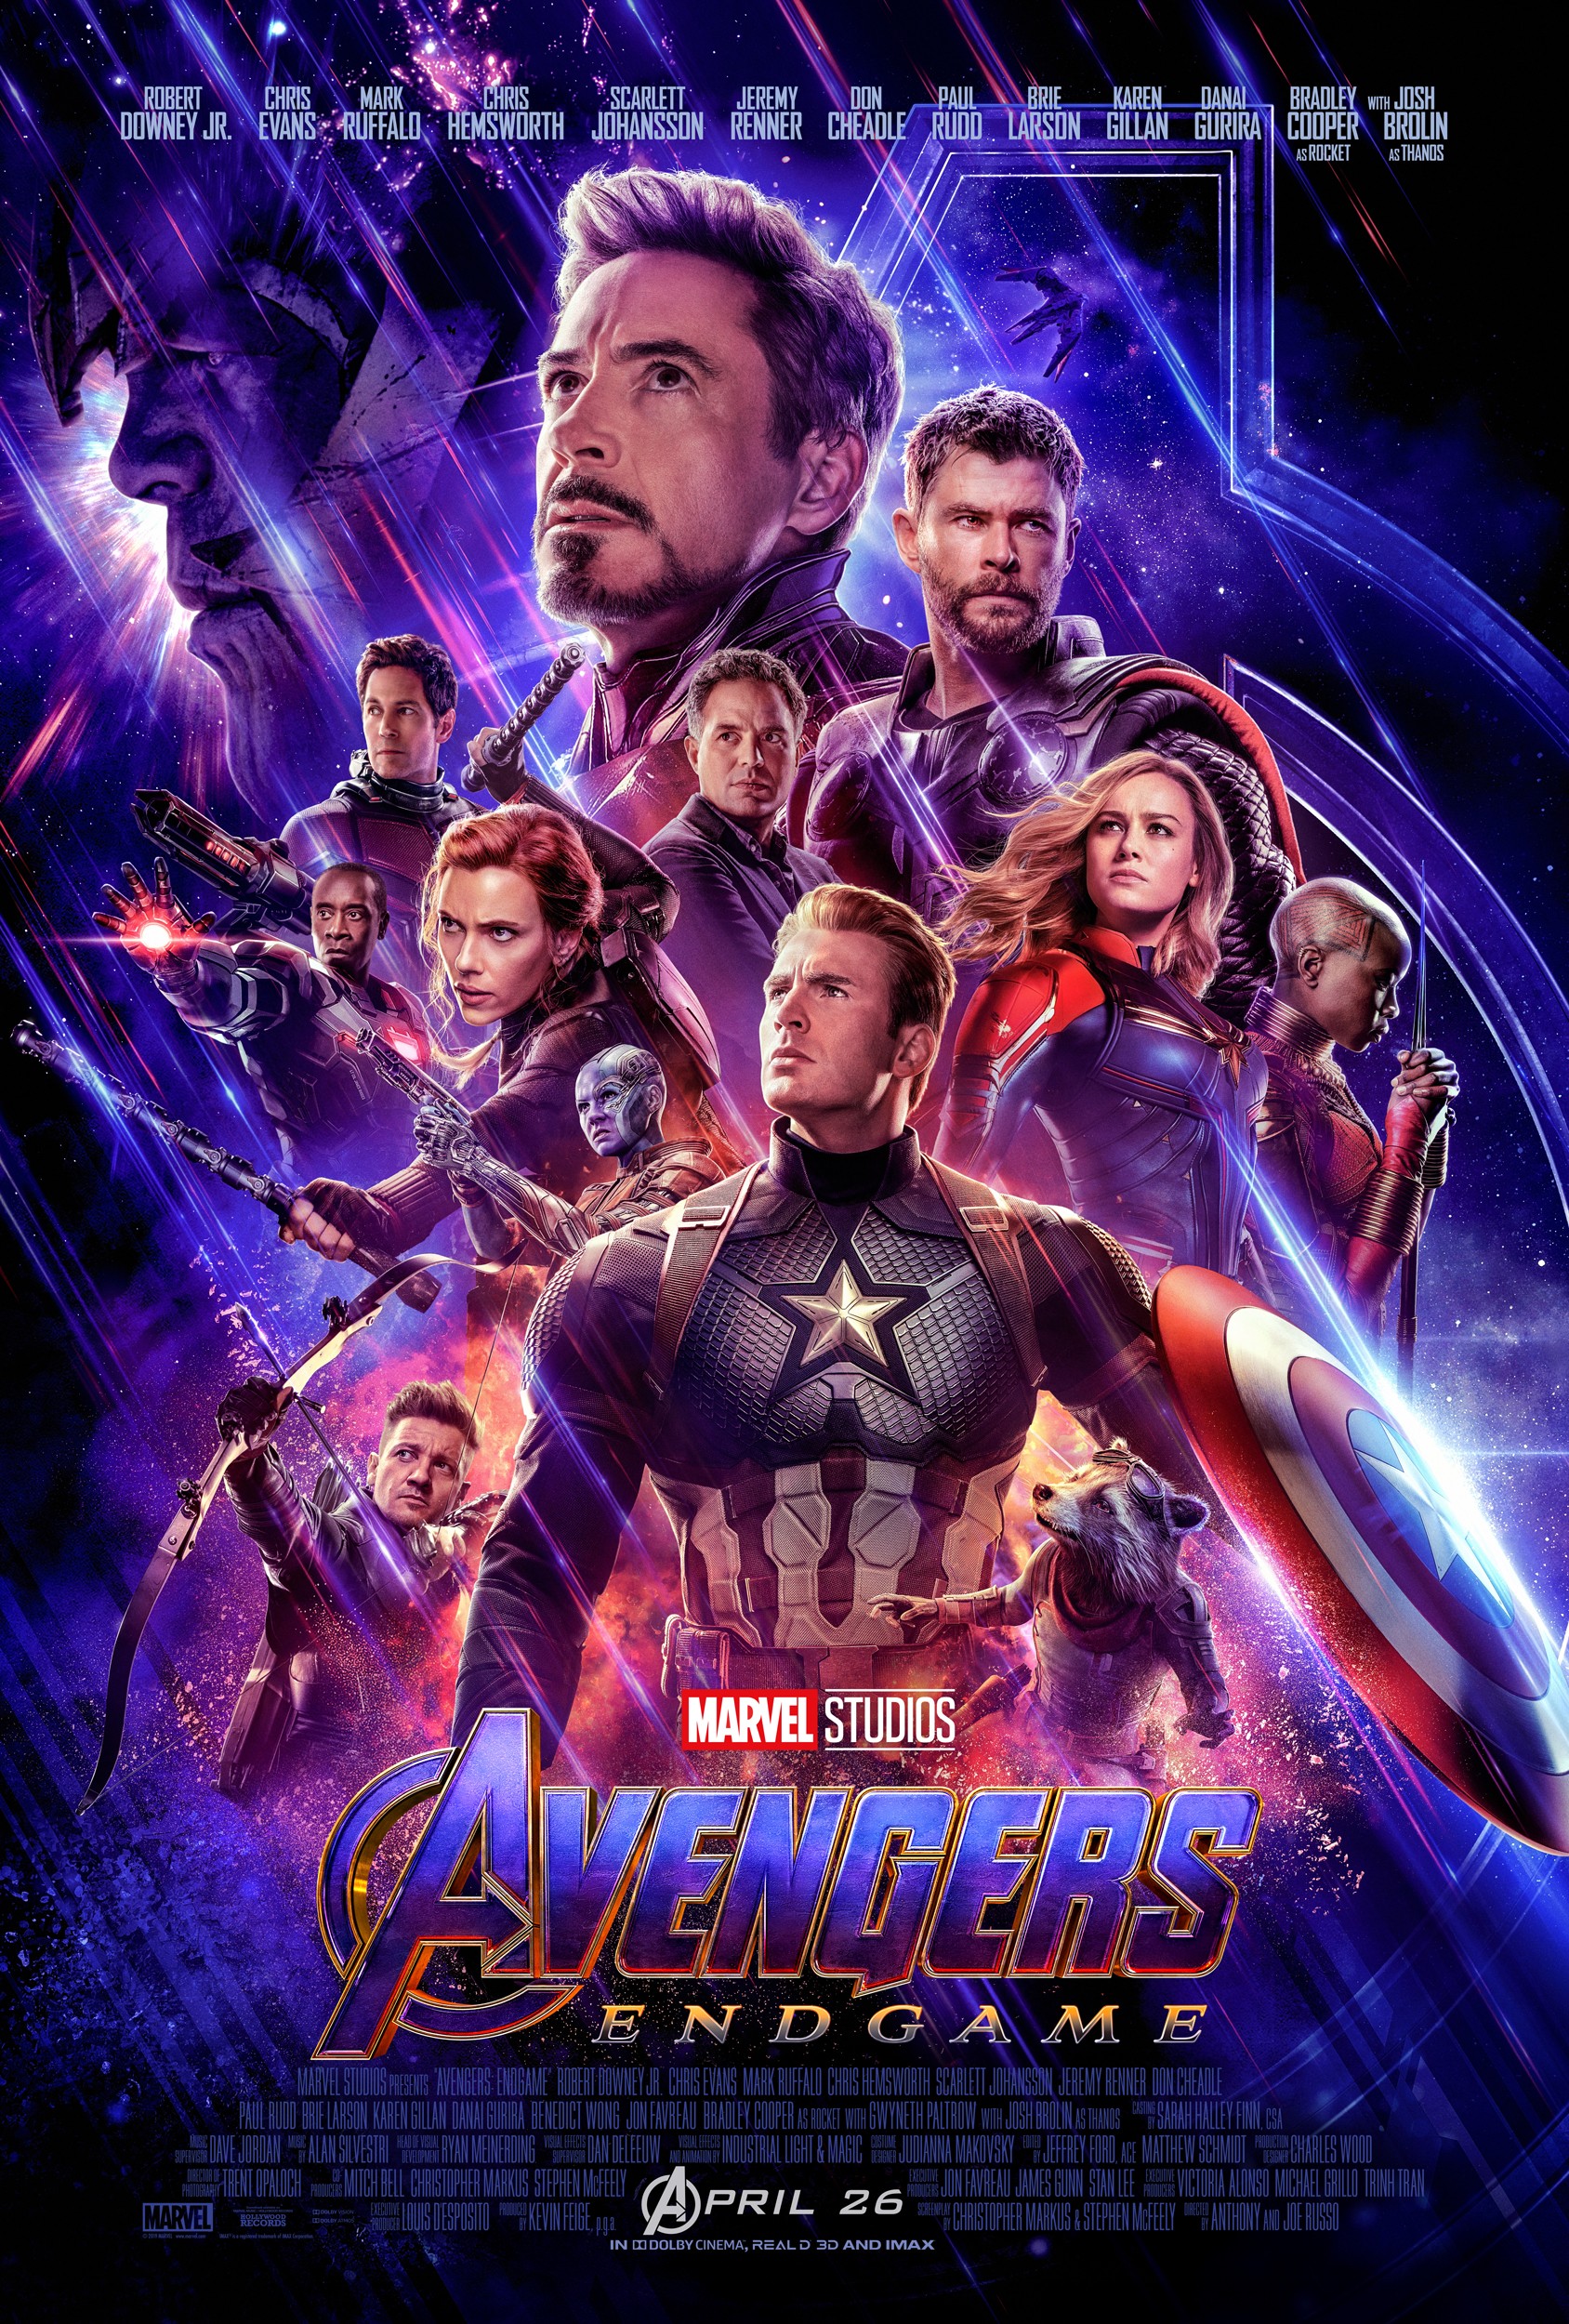 Iron Man 2 Putlockers Avengers: Endgame - Rotten Tomatoes